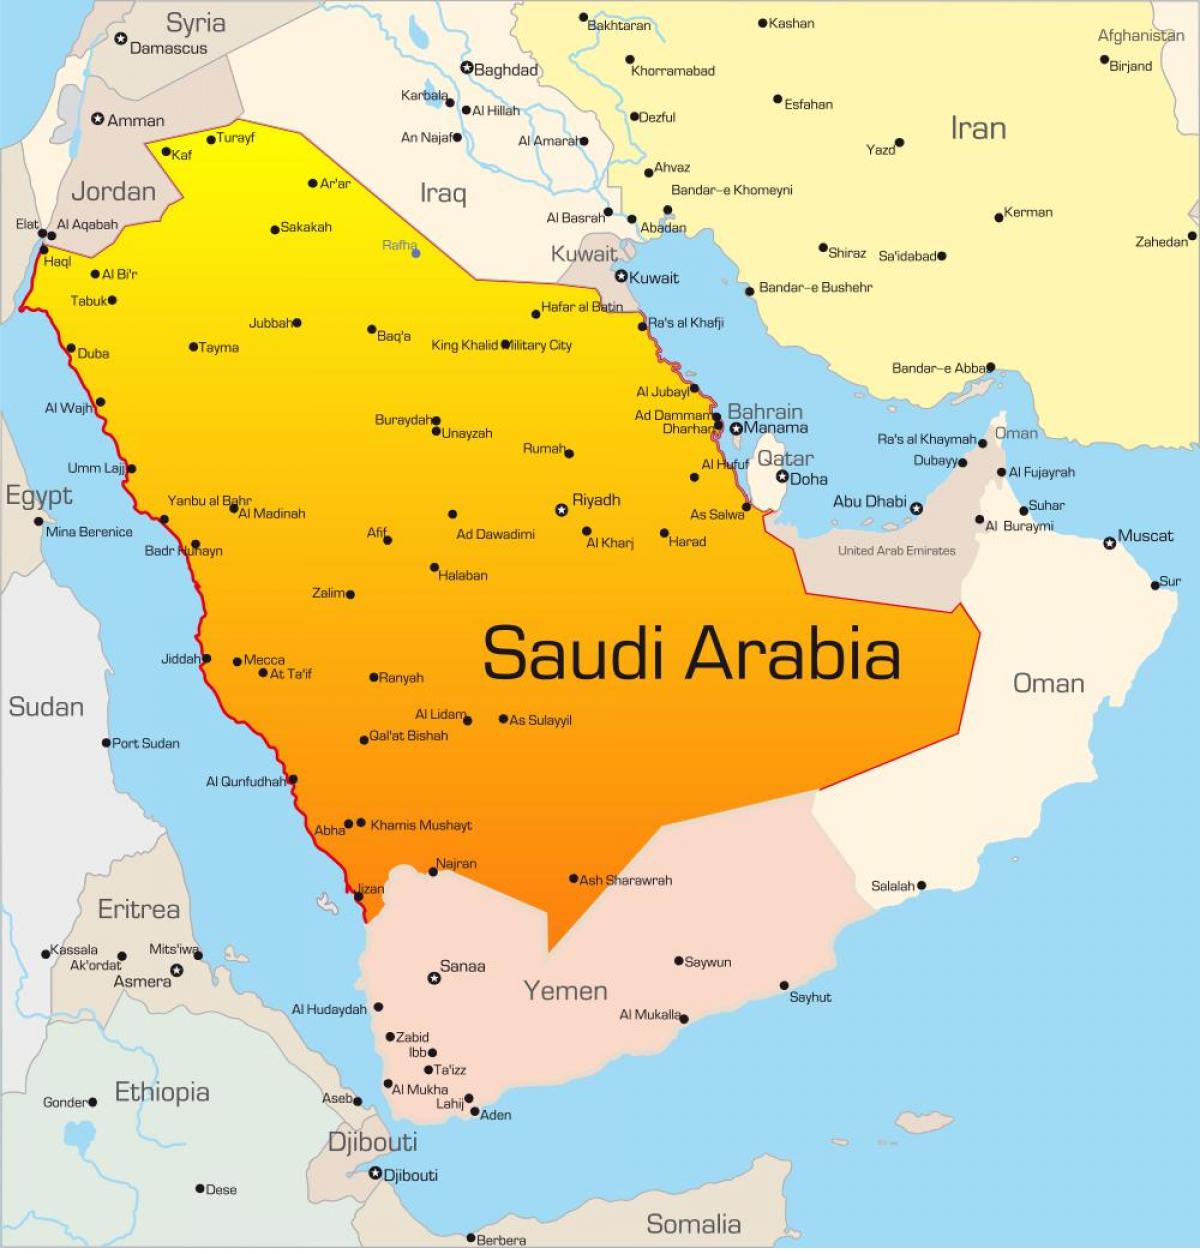 Mekka saudi-arabia kartta - Makkah, saudi-arabia kartta (Saudi-Arabia)